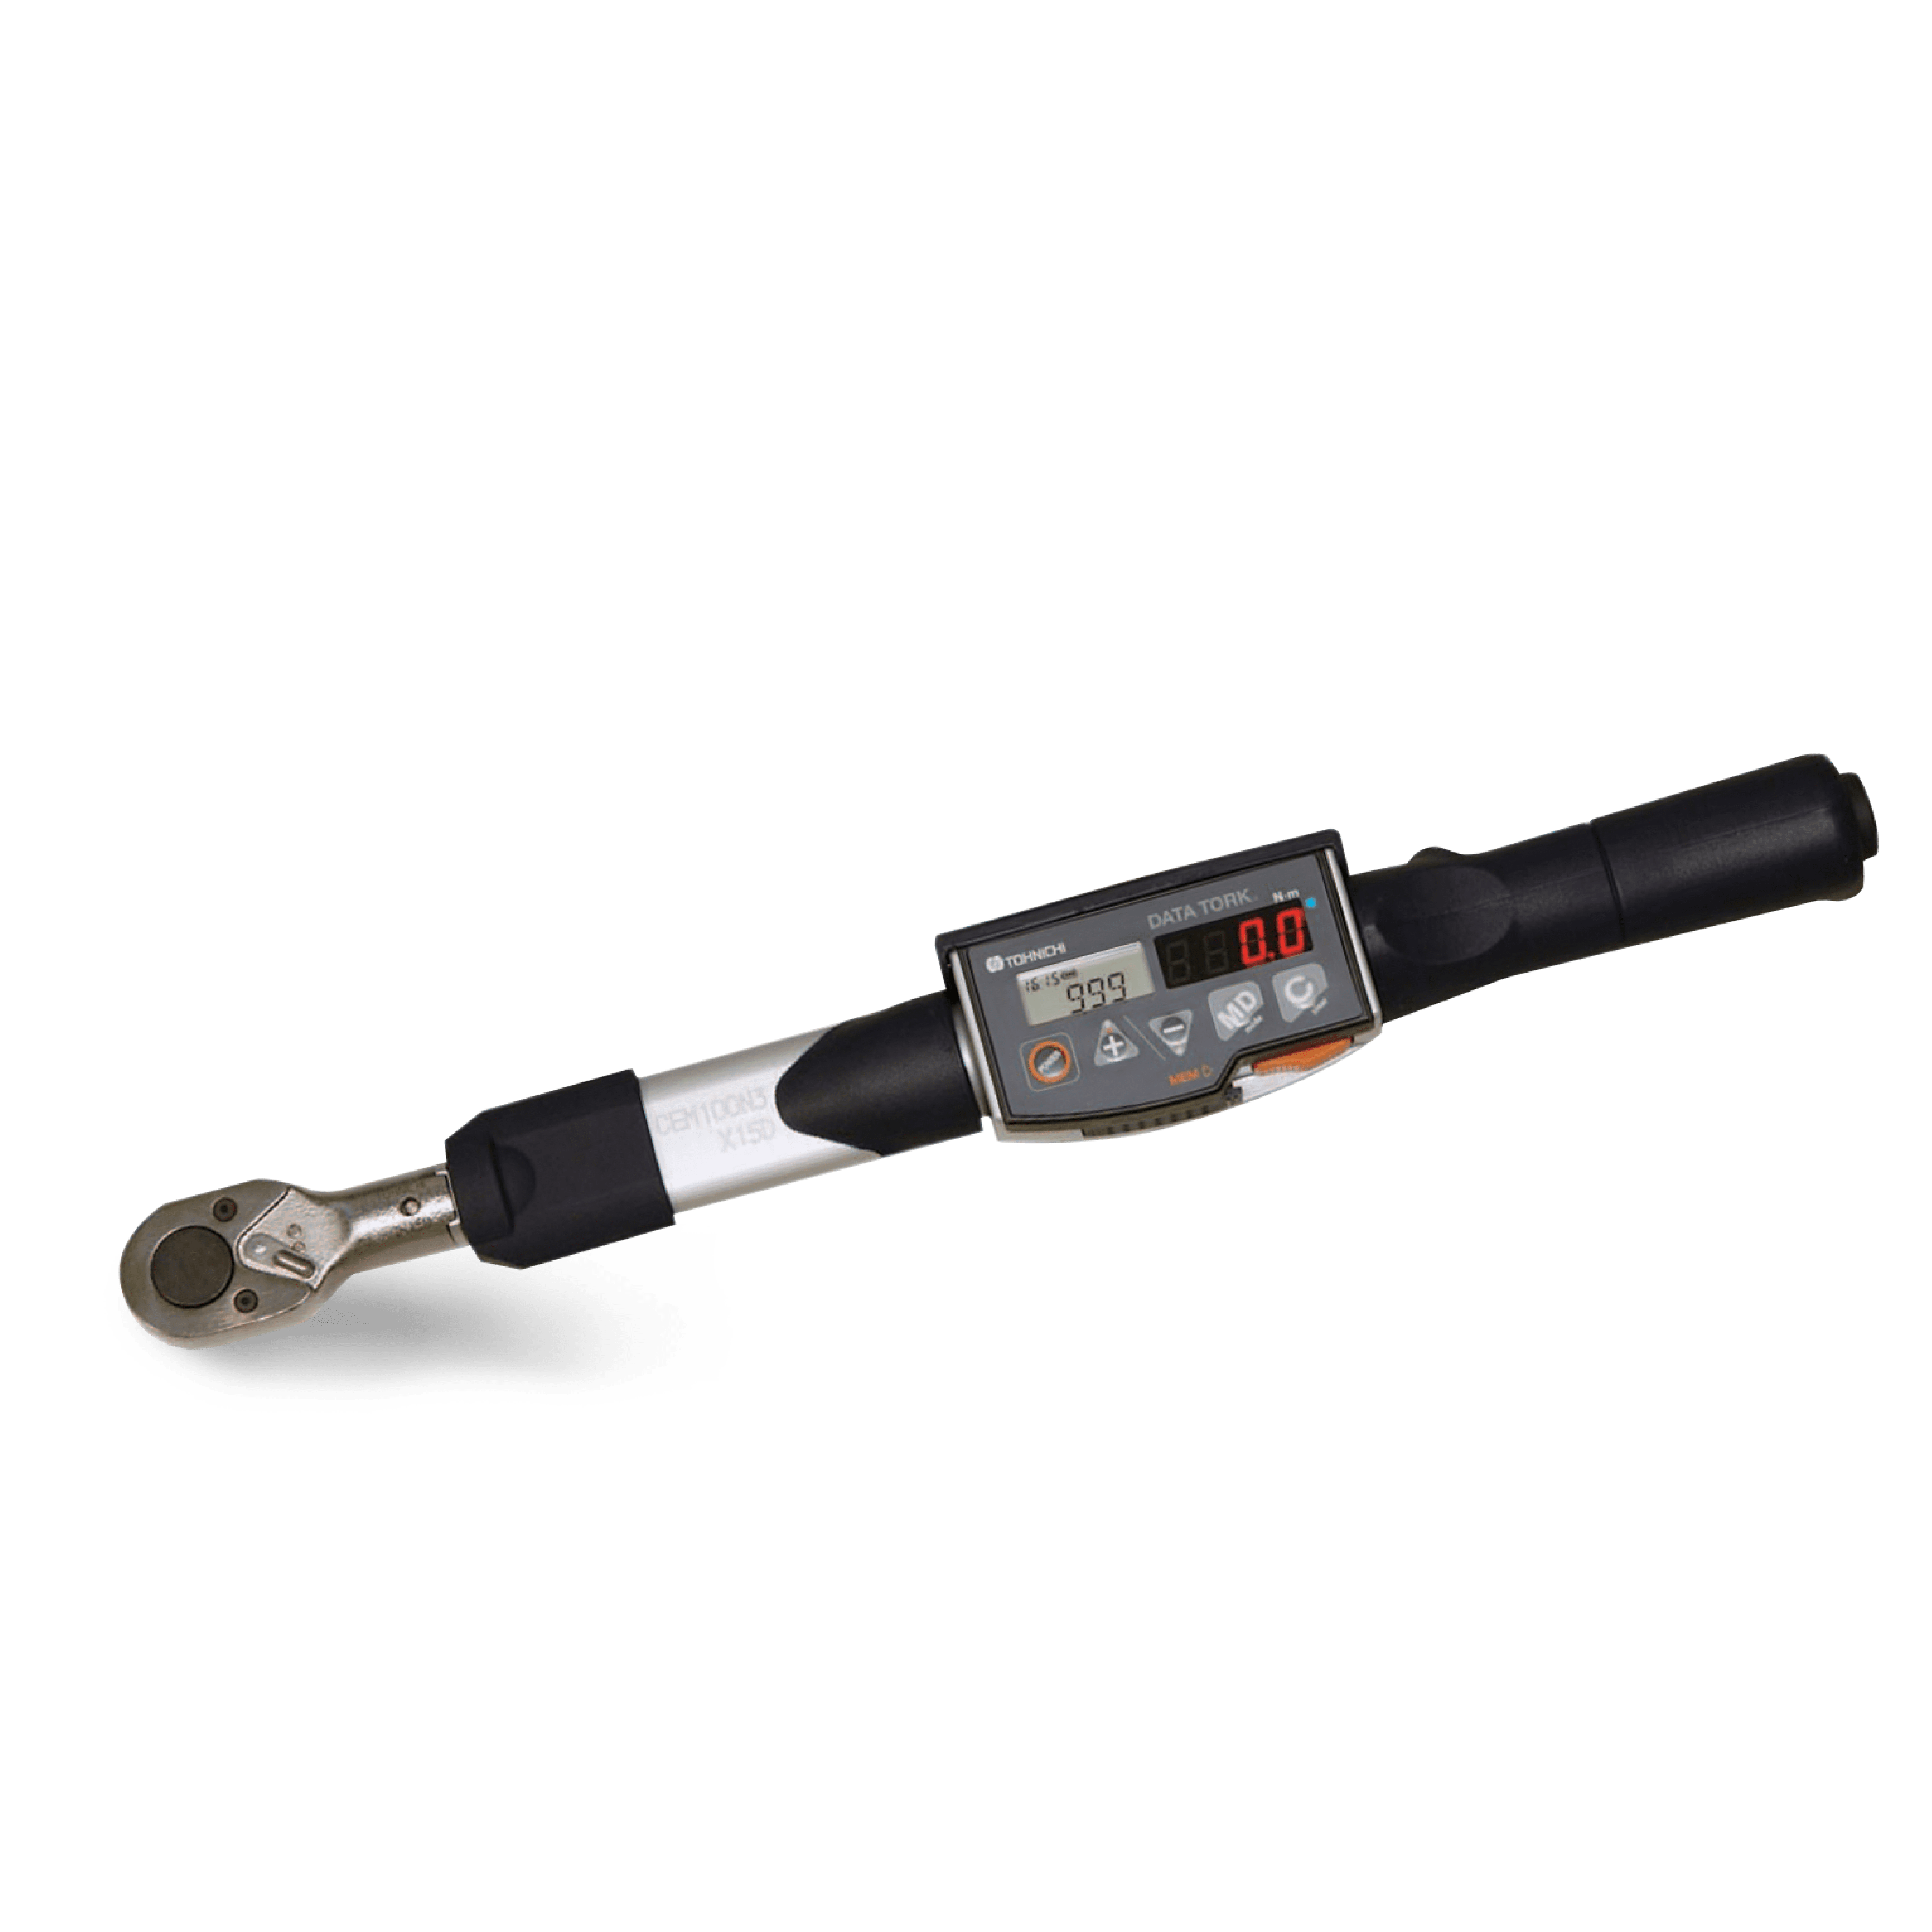 Digital torque wrench